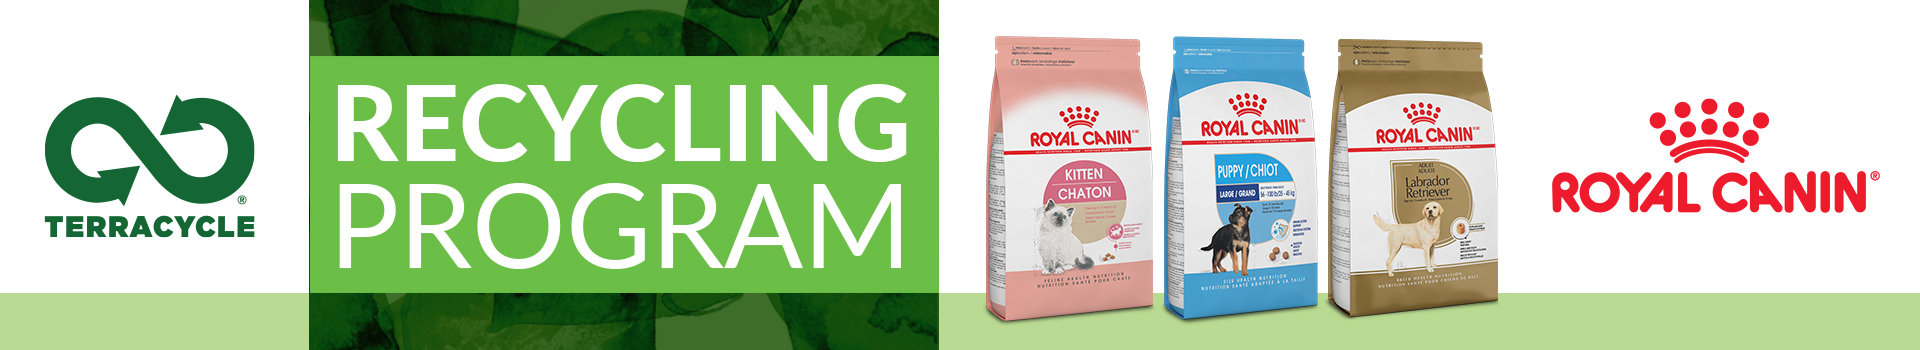 Royal Canin - Recycling Program